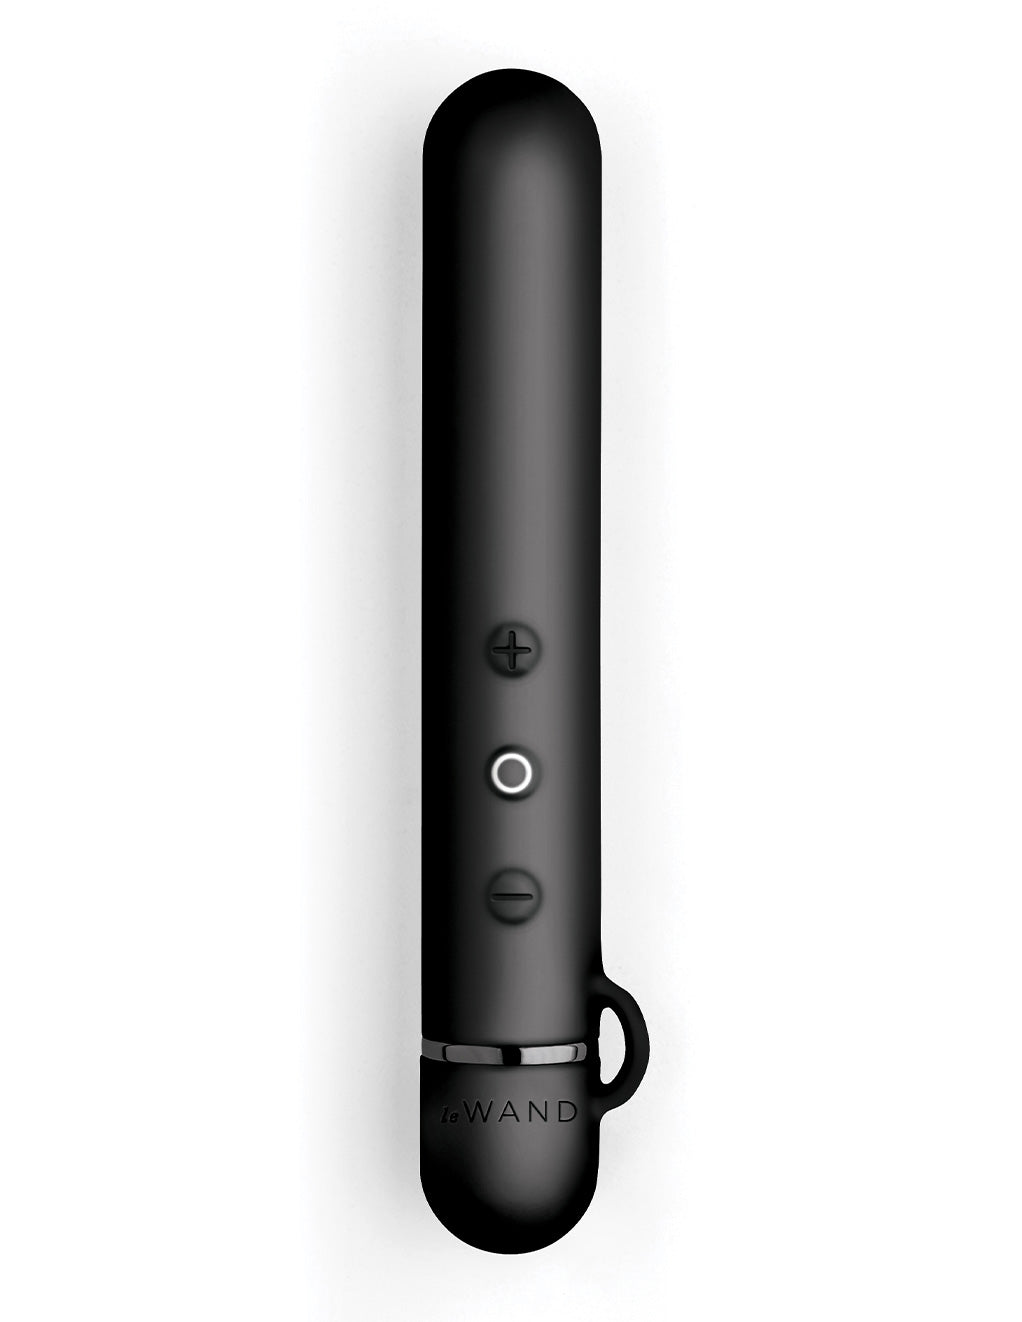 Le Wand Baton Rechargeable Clitoral Vibrator- Black- Front